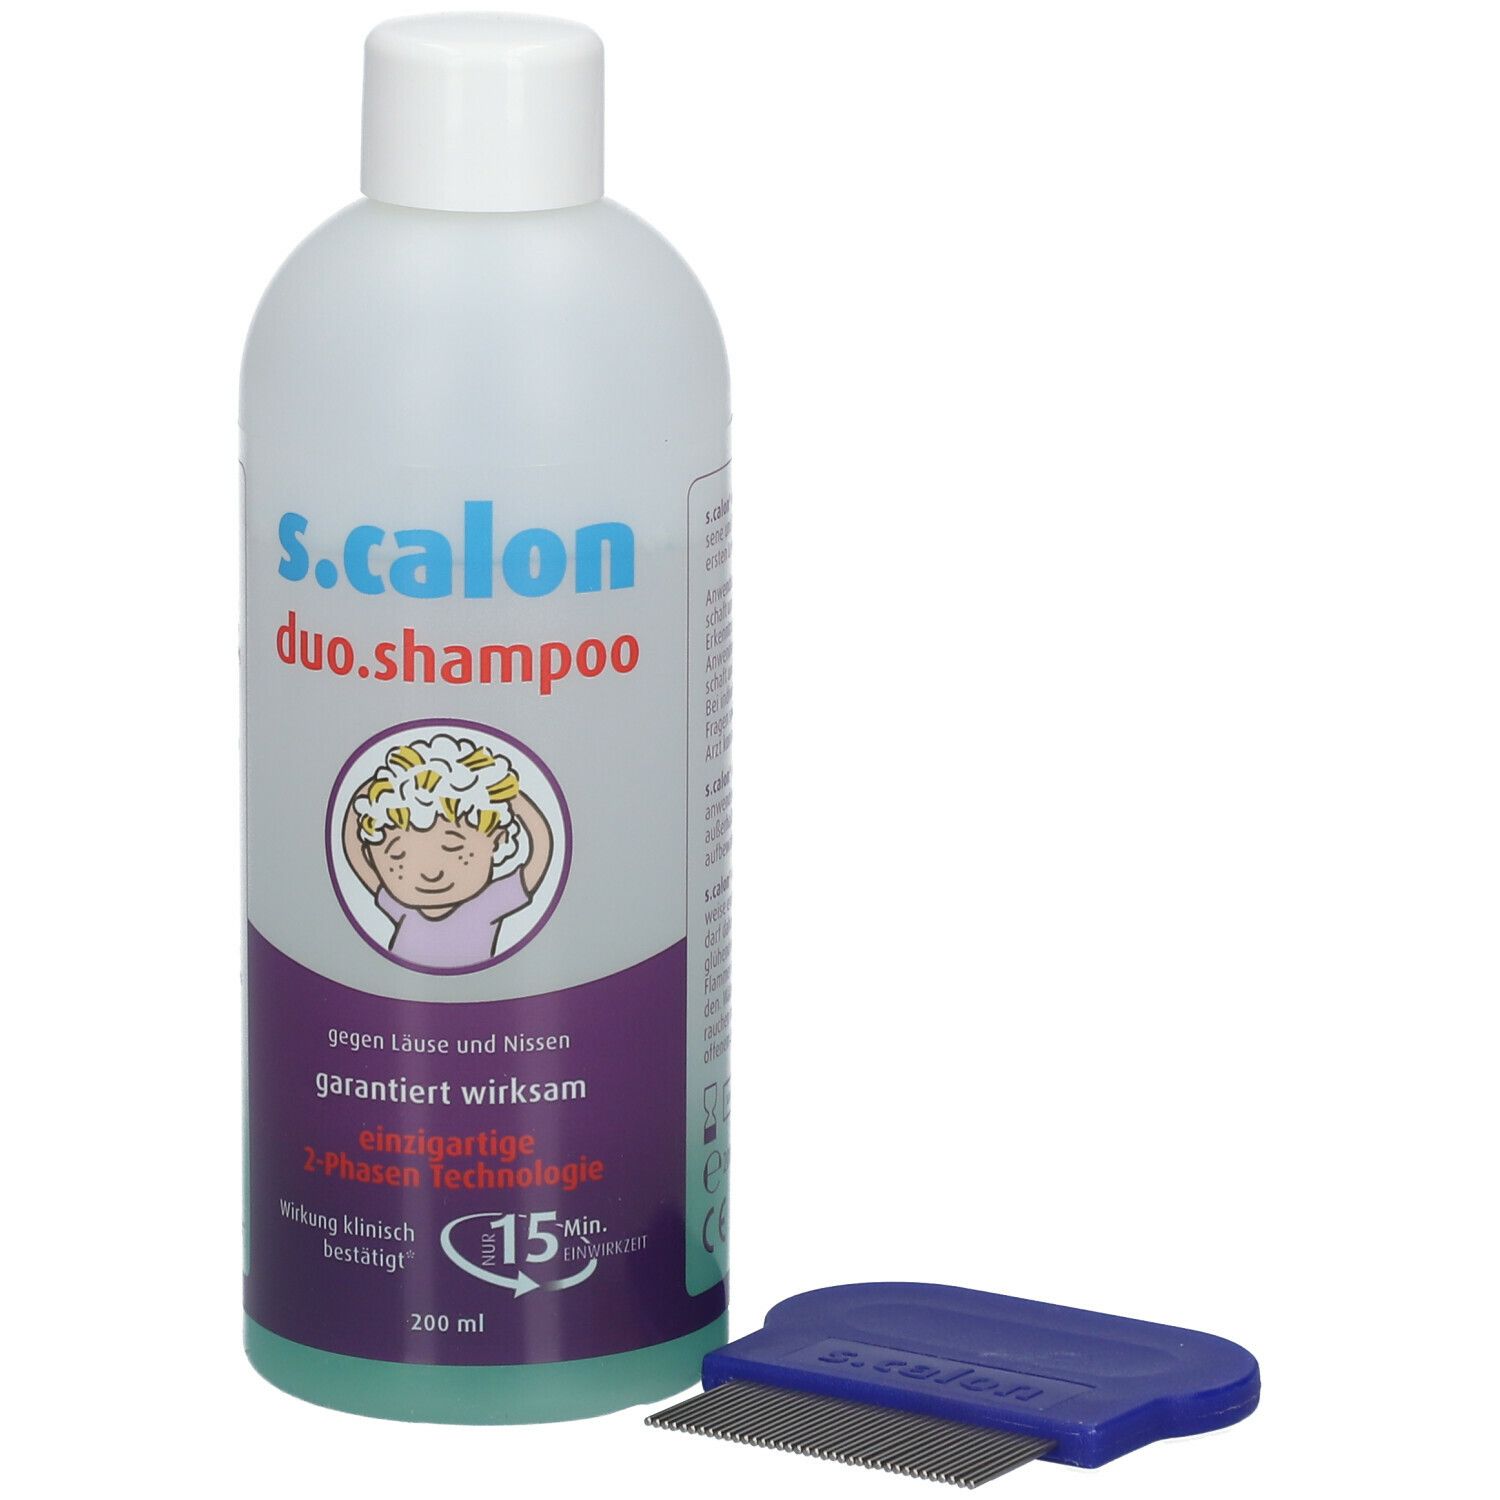 S.Calon Duo Shampoo